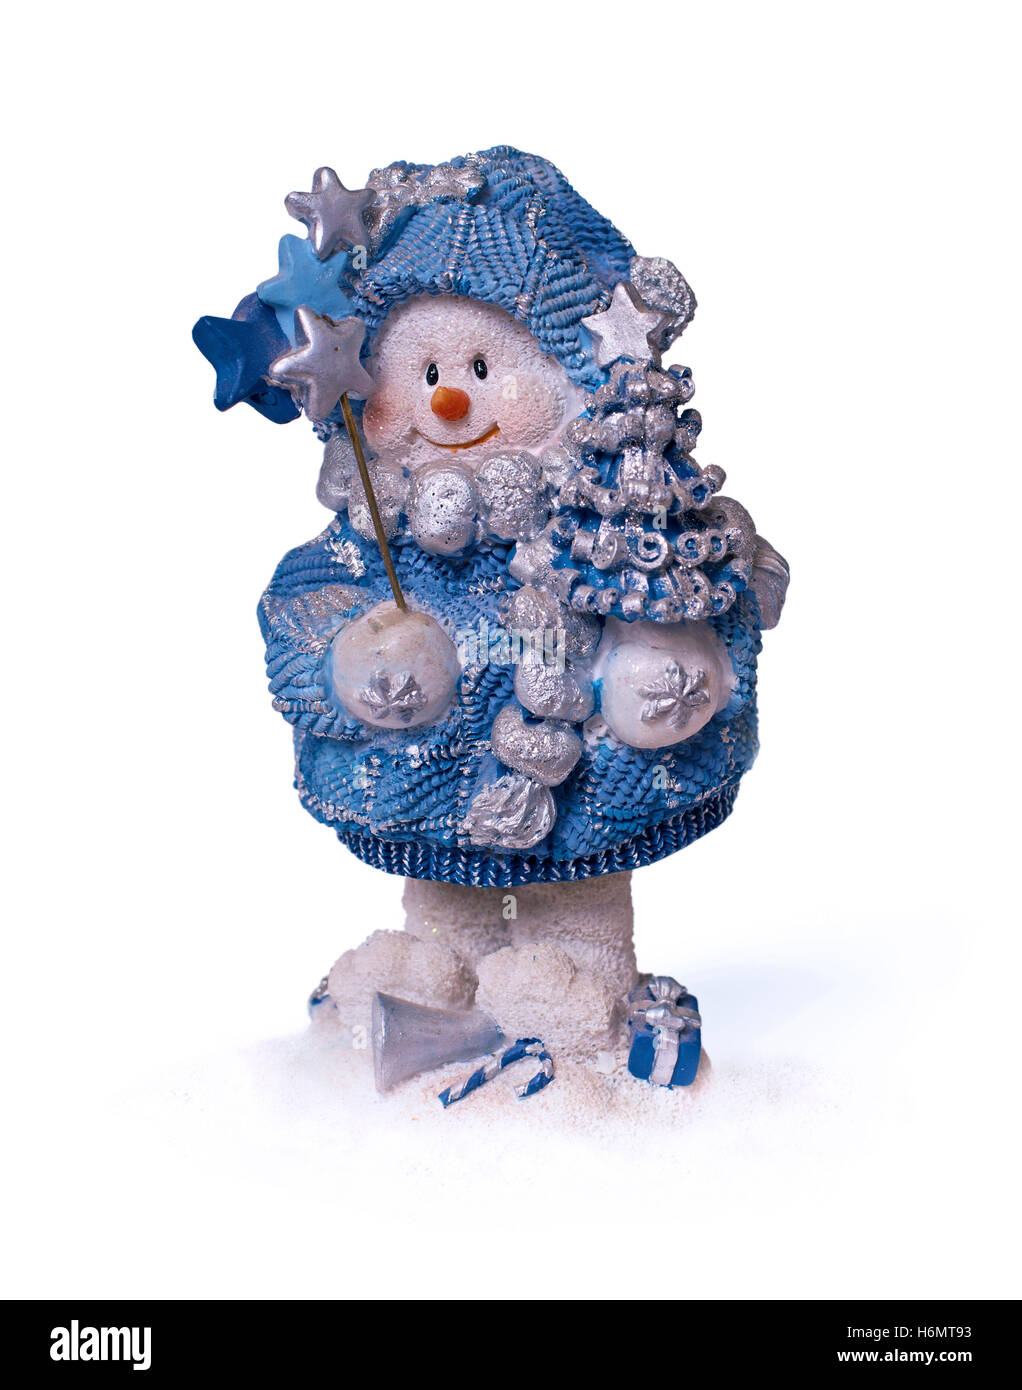 Christmas snowman with magic wand Stock Photo